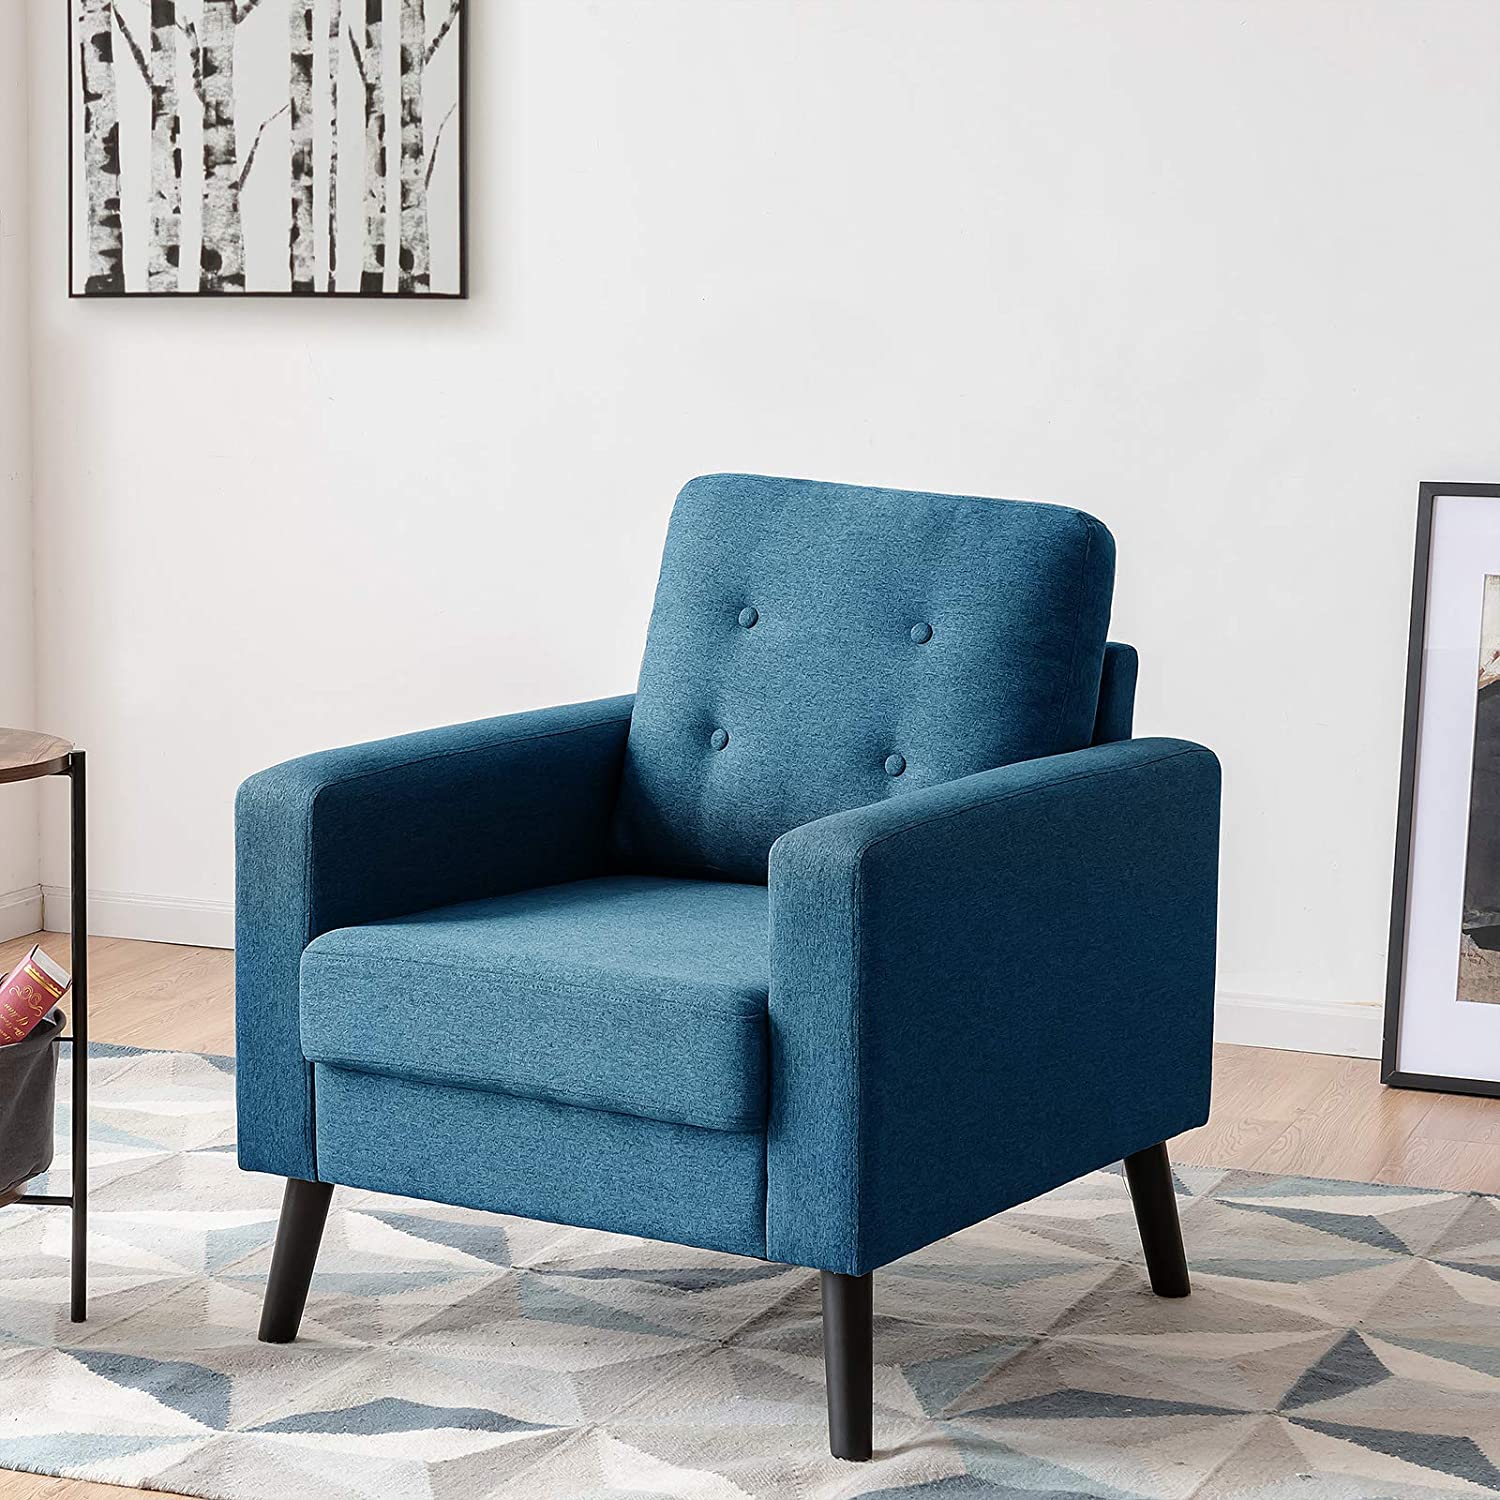 Giantex Modern Accent Chair, Mid-Century Upholstered Armchair Club Chair